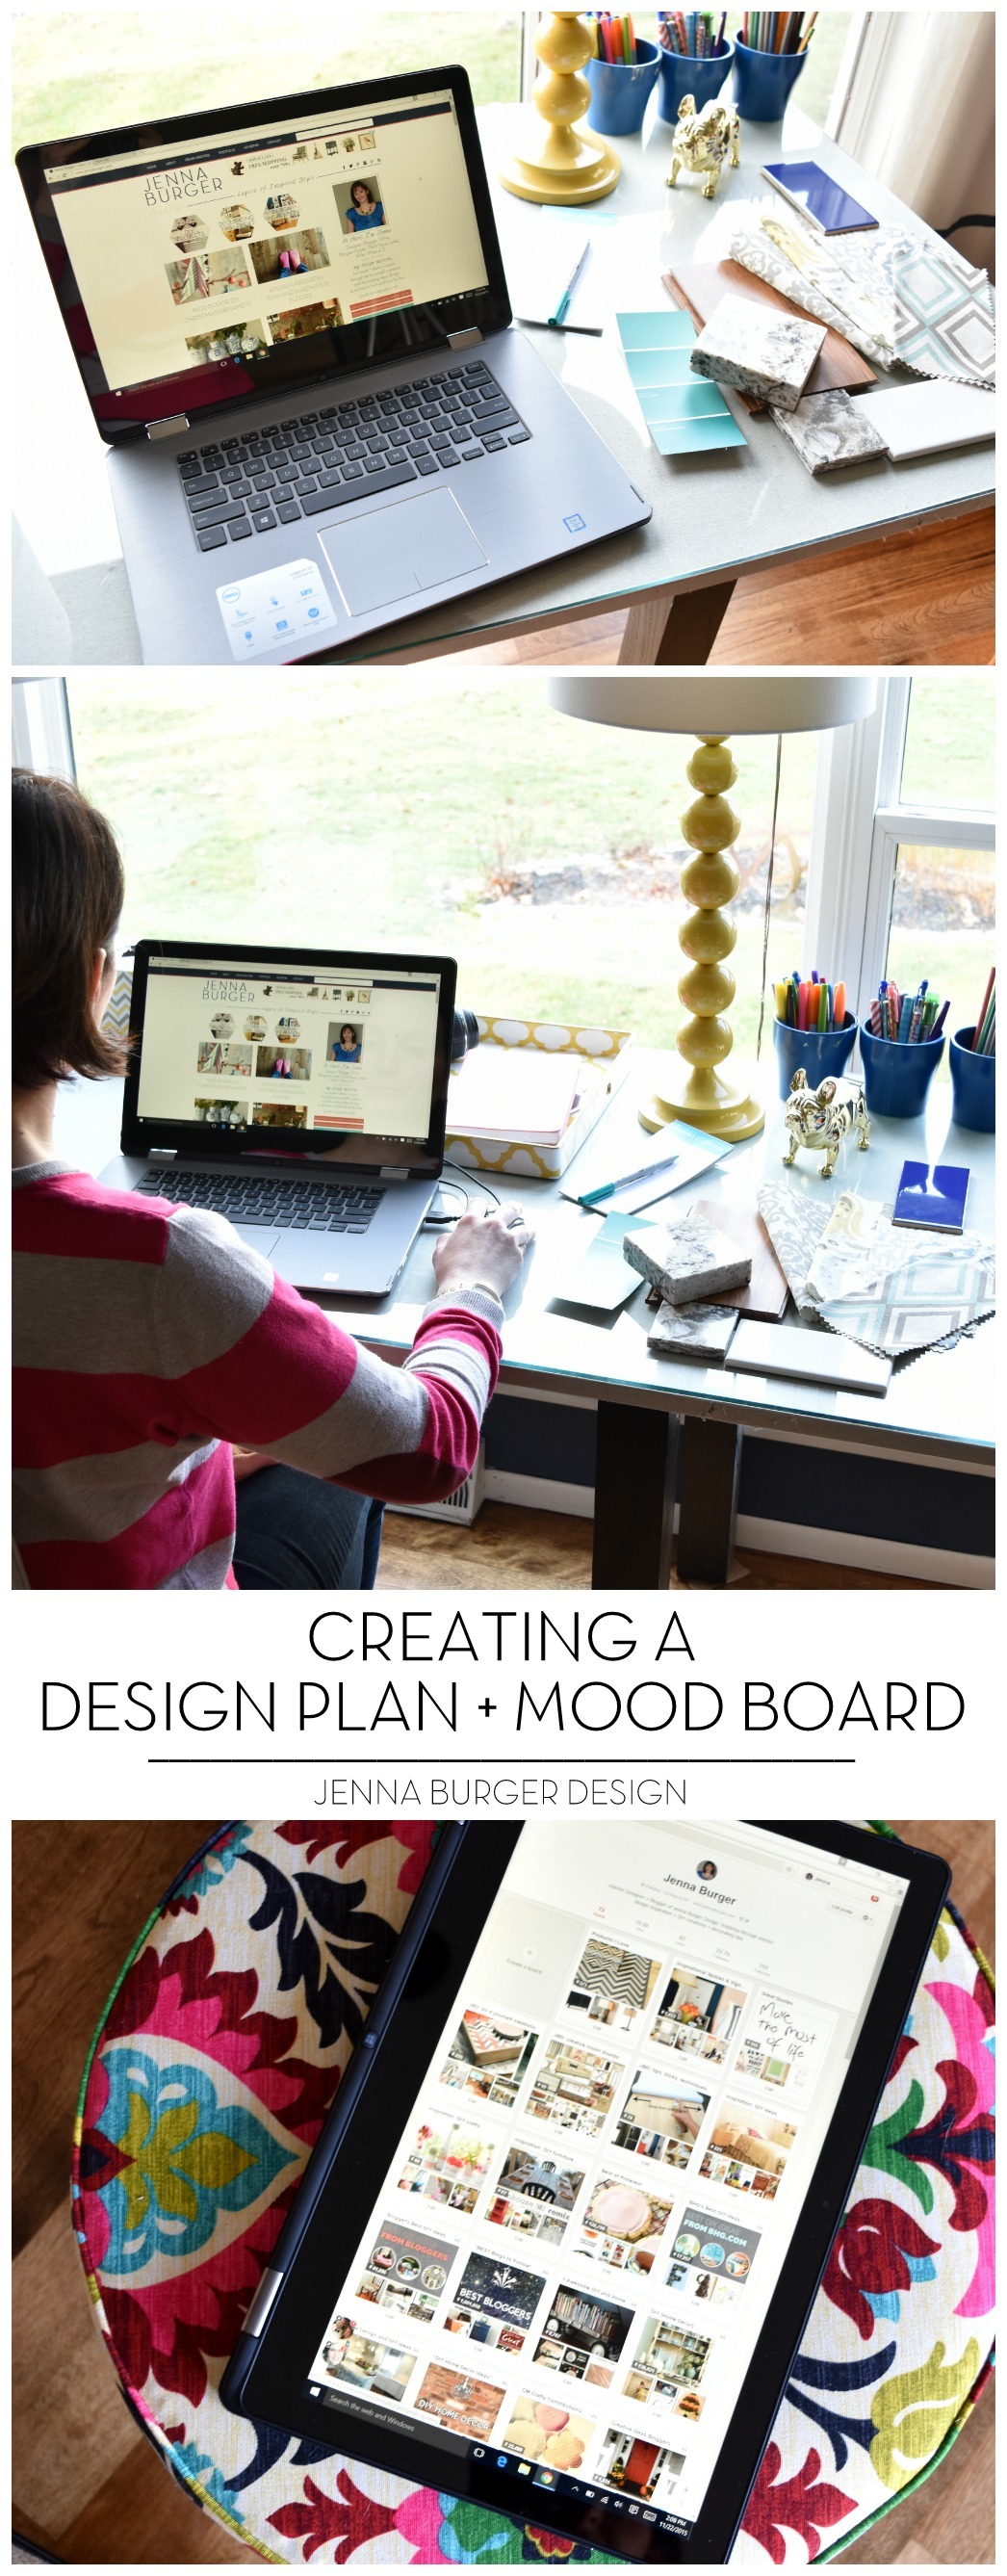 Creating a Design Plan + Mood Board